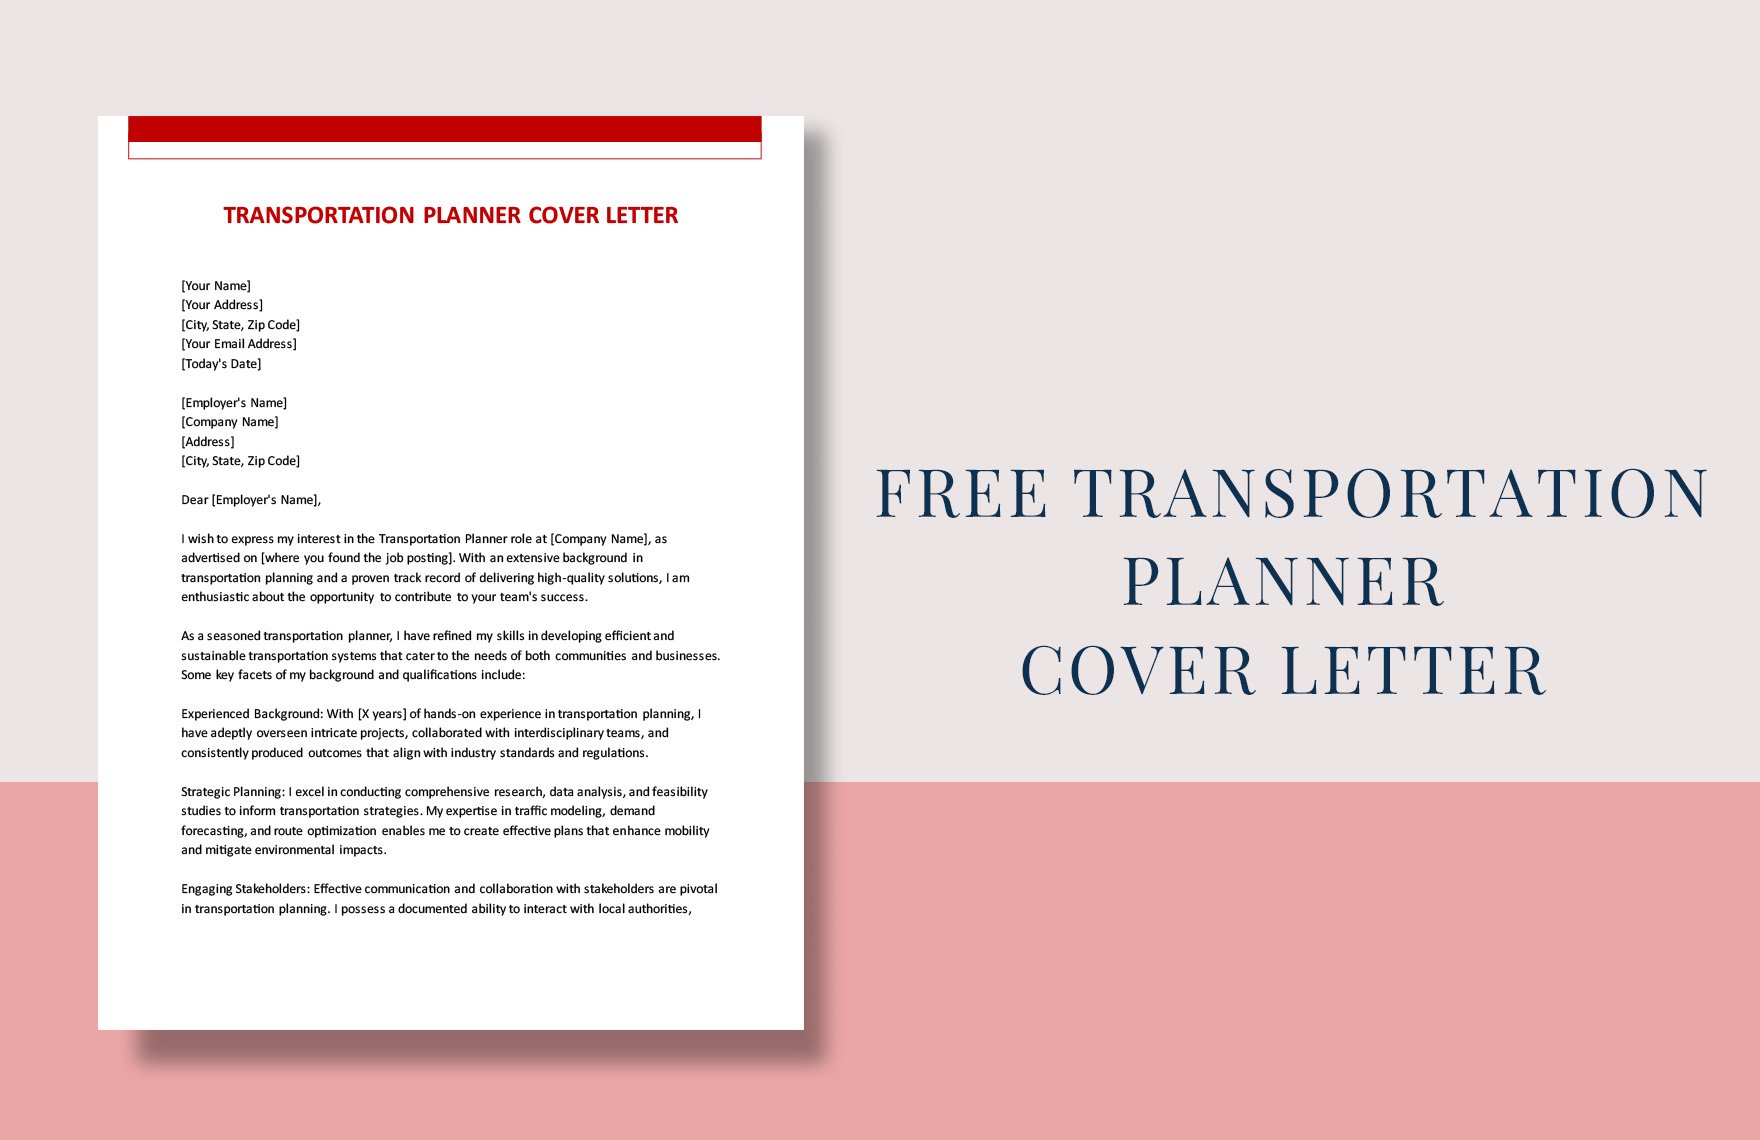 Transportation Planner Cover Letter in Word, Google Docs, PDF